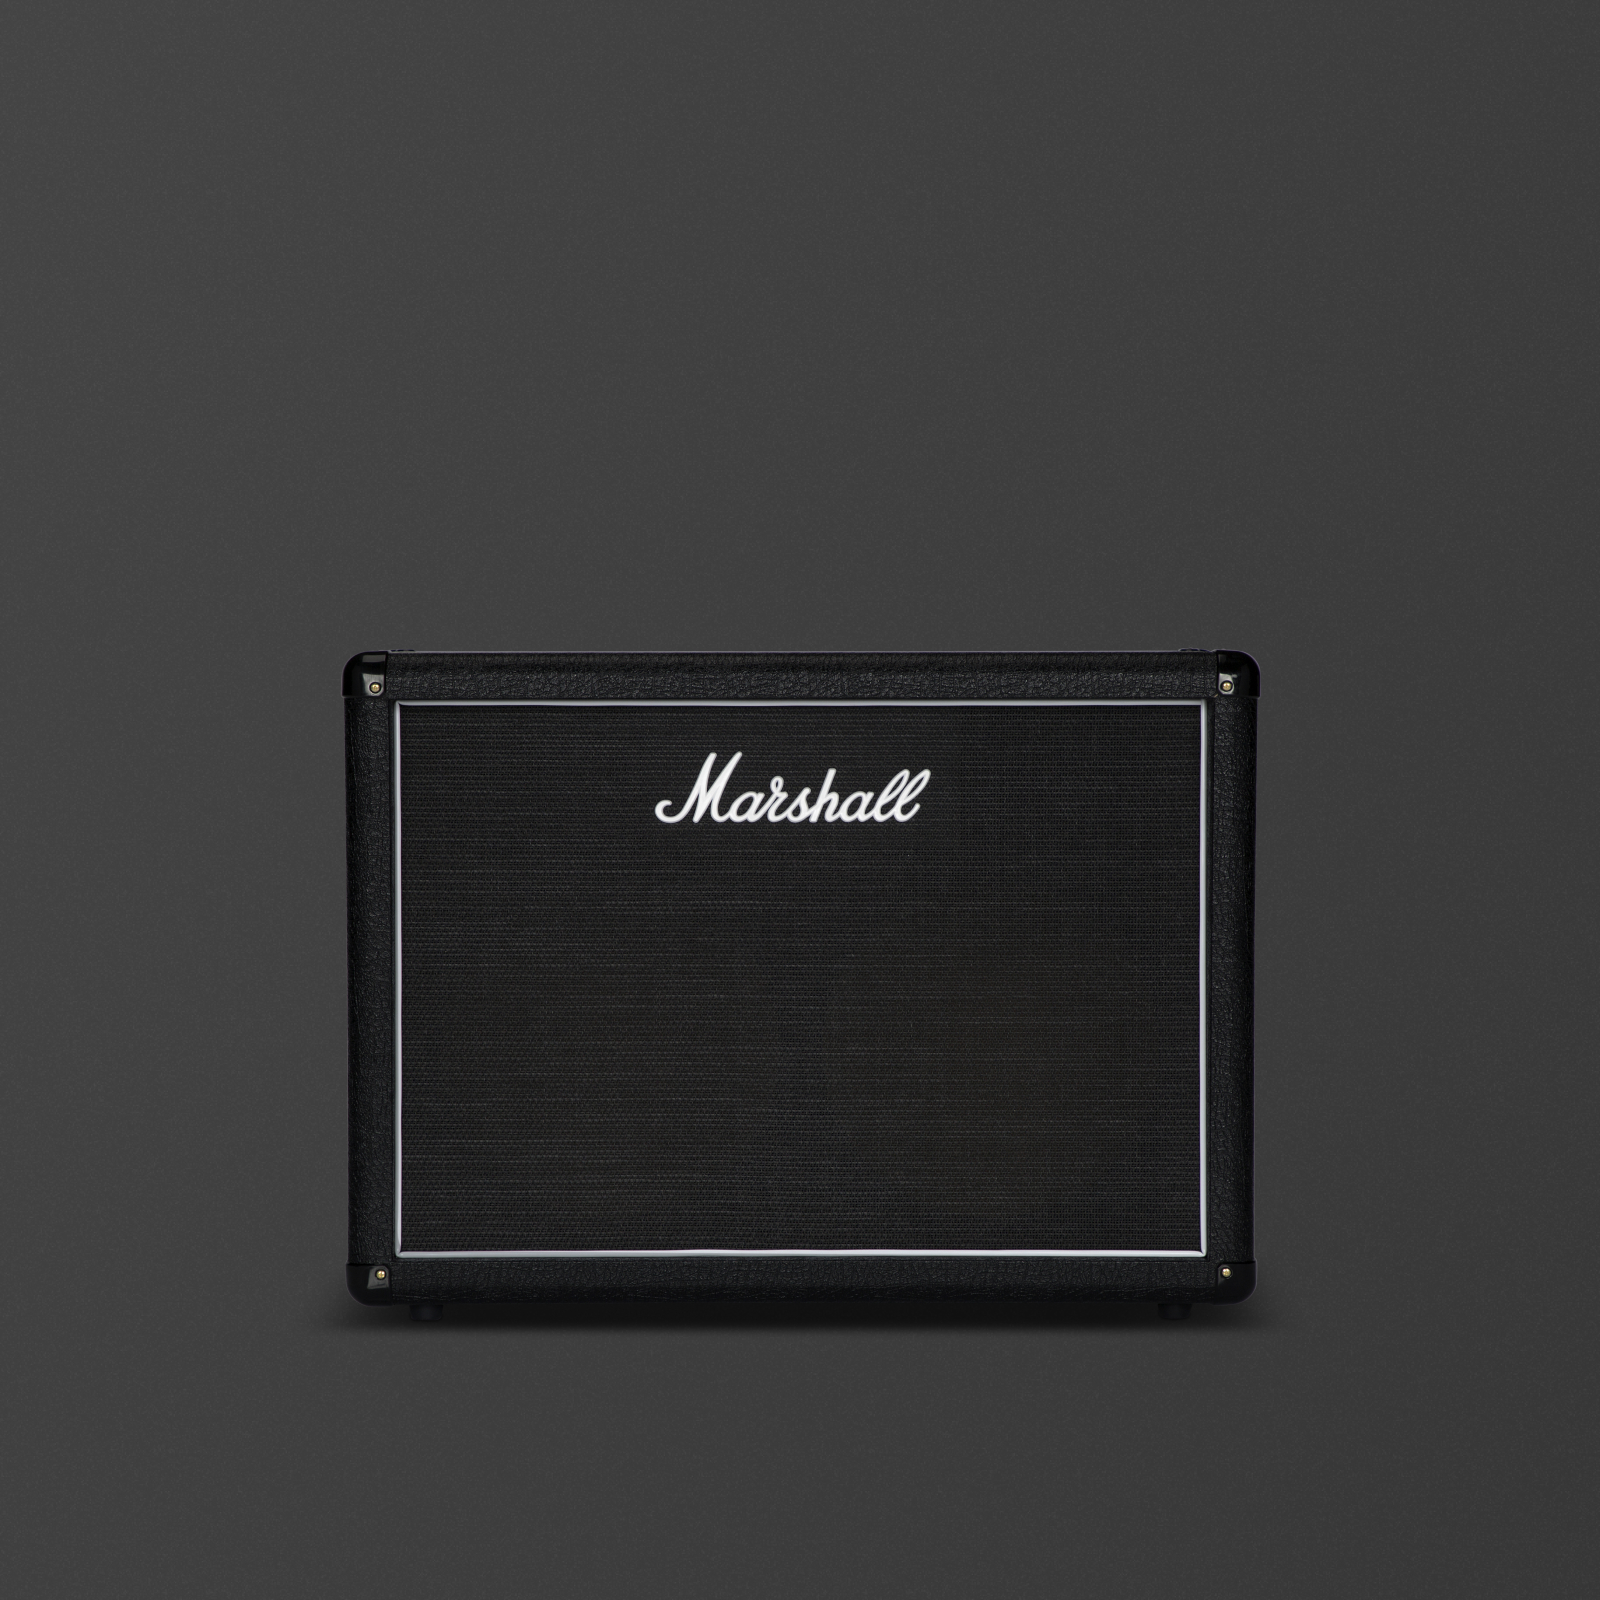 Caja negra MX212 de Marshall.